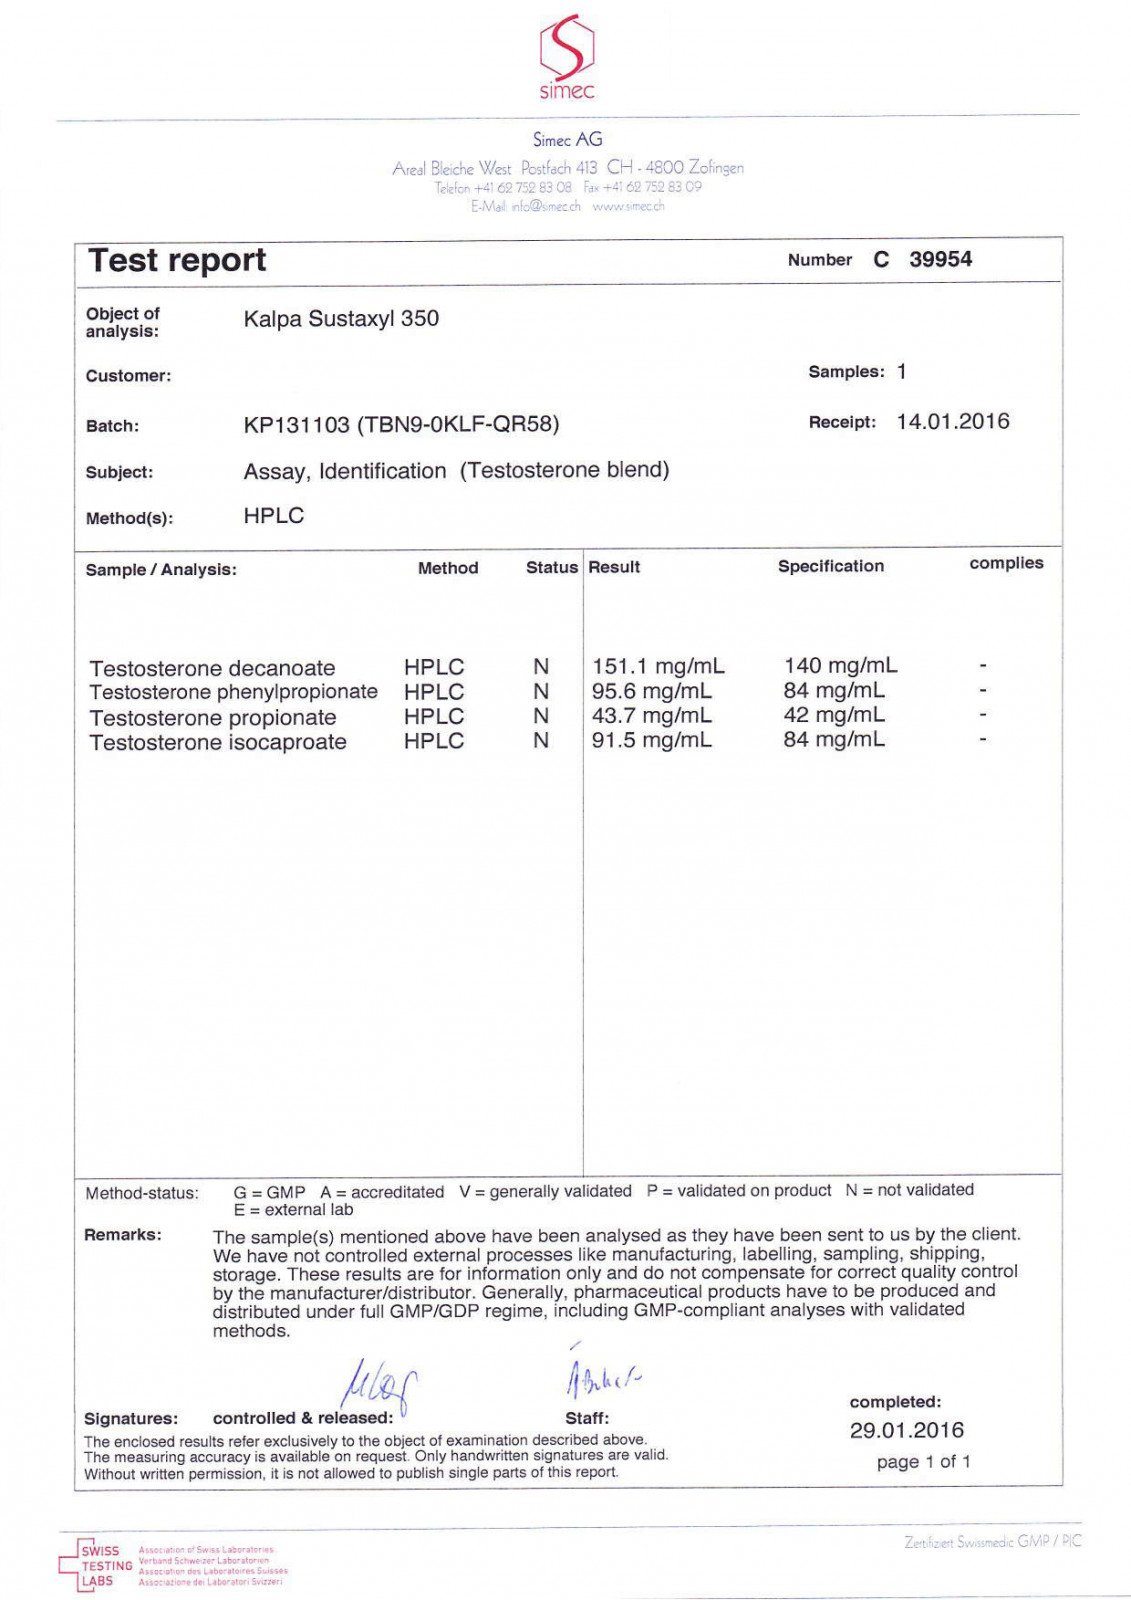 sustaxyl 350 lab test results